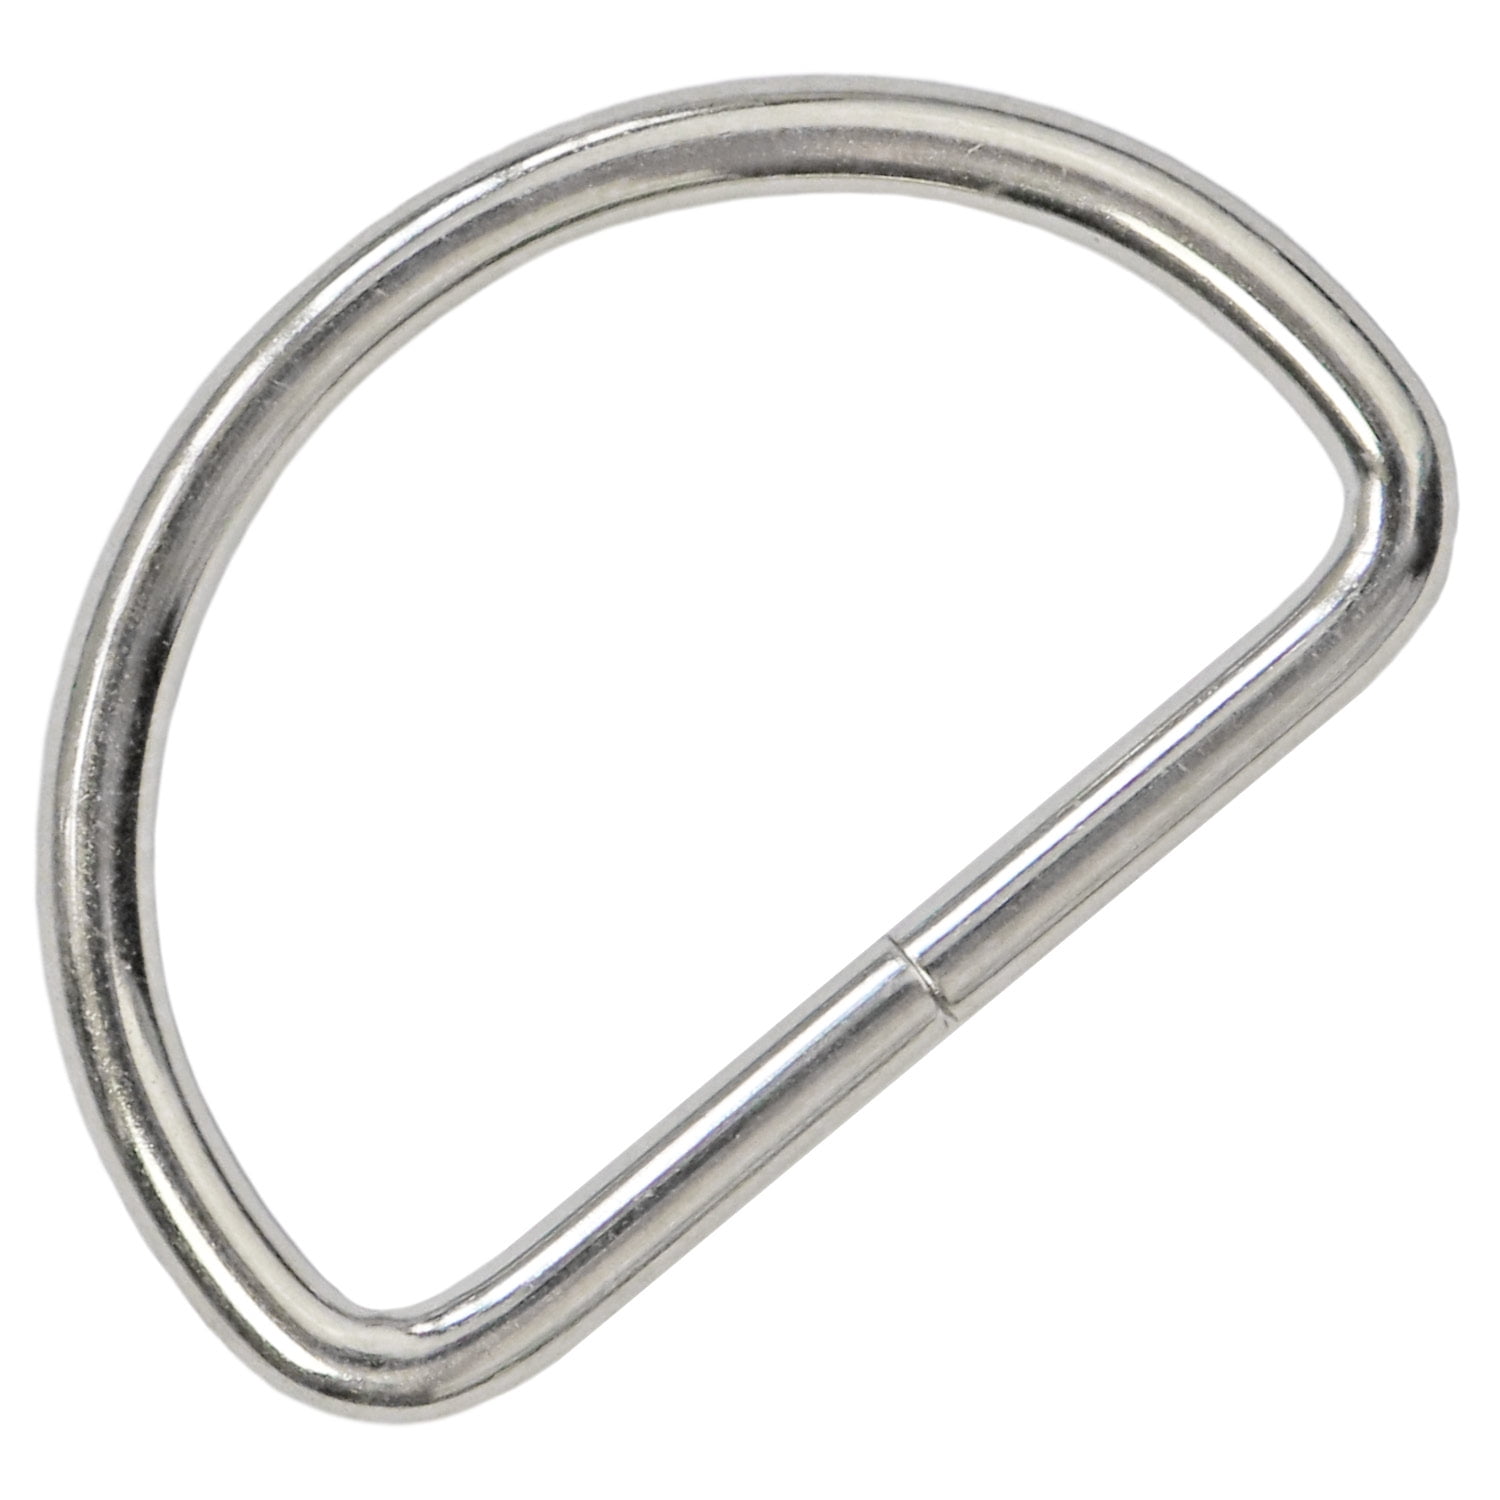 YIXI-SBest Metal D Ring Non Welded D-Rings Assorted 0.39 Inch, 0.5 Inch,  0.63 Inch, 0.75 Inch, 1 Inch (120 Pack)